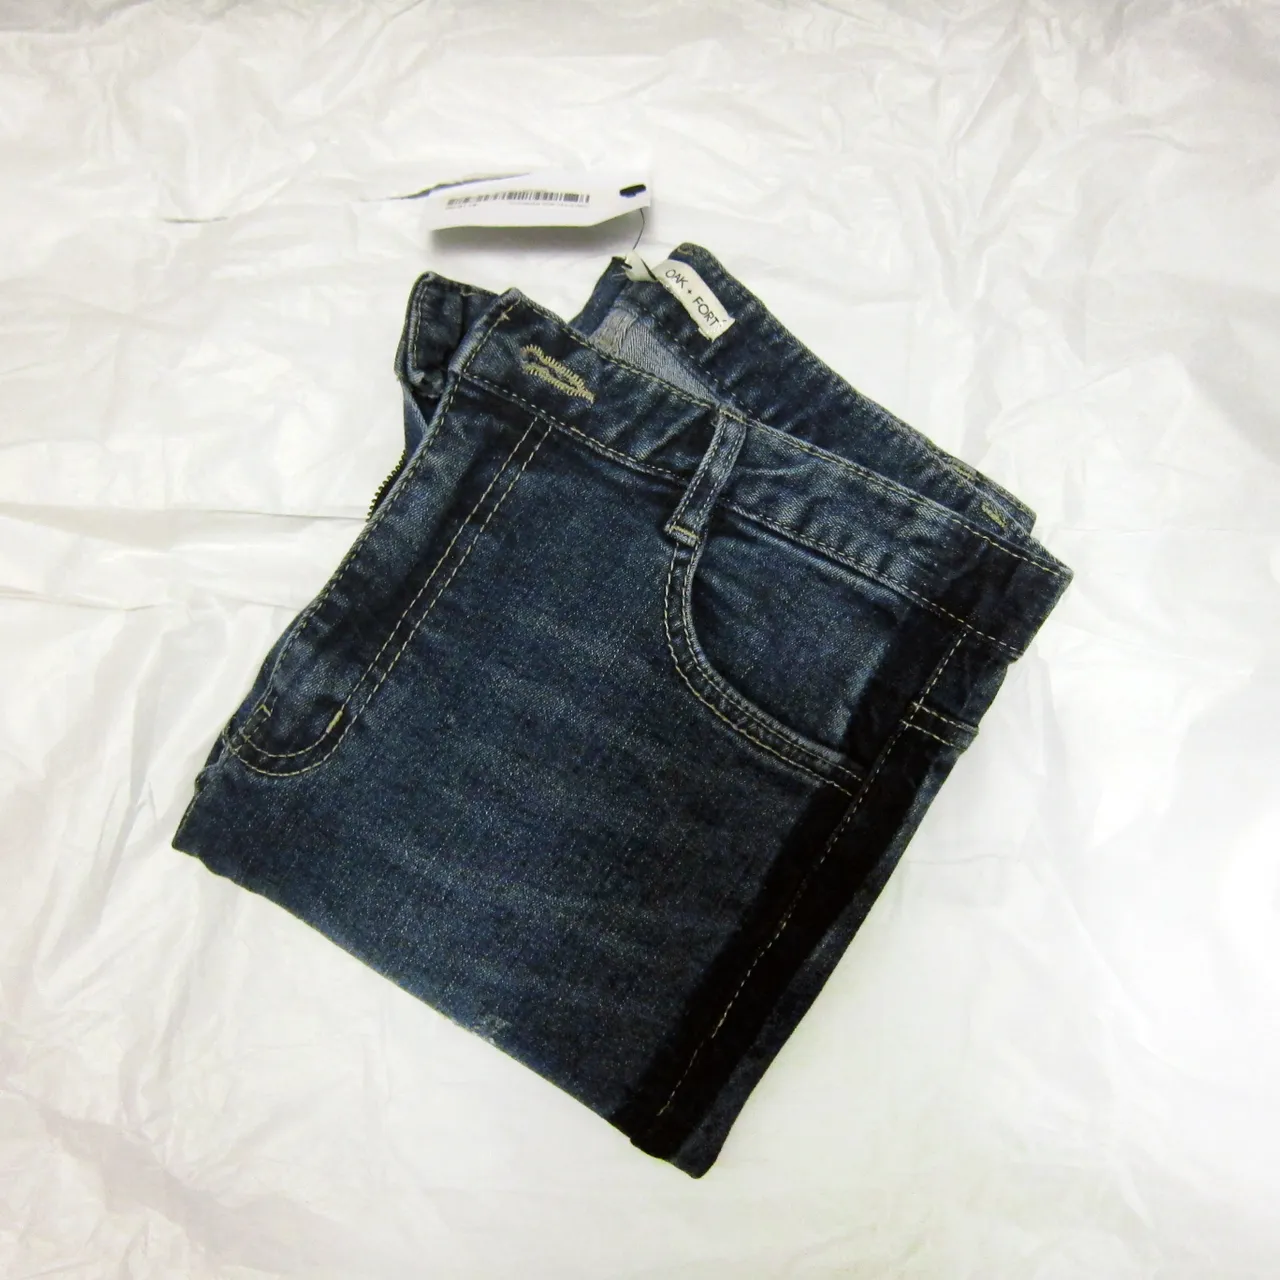 OAK + FORT jeans photo 7